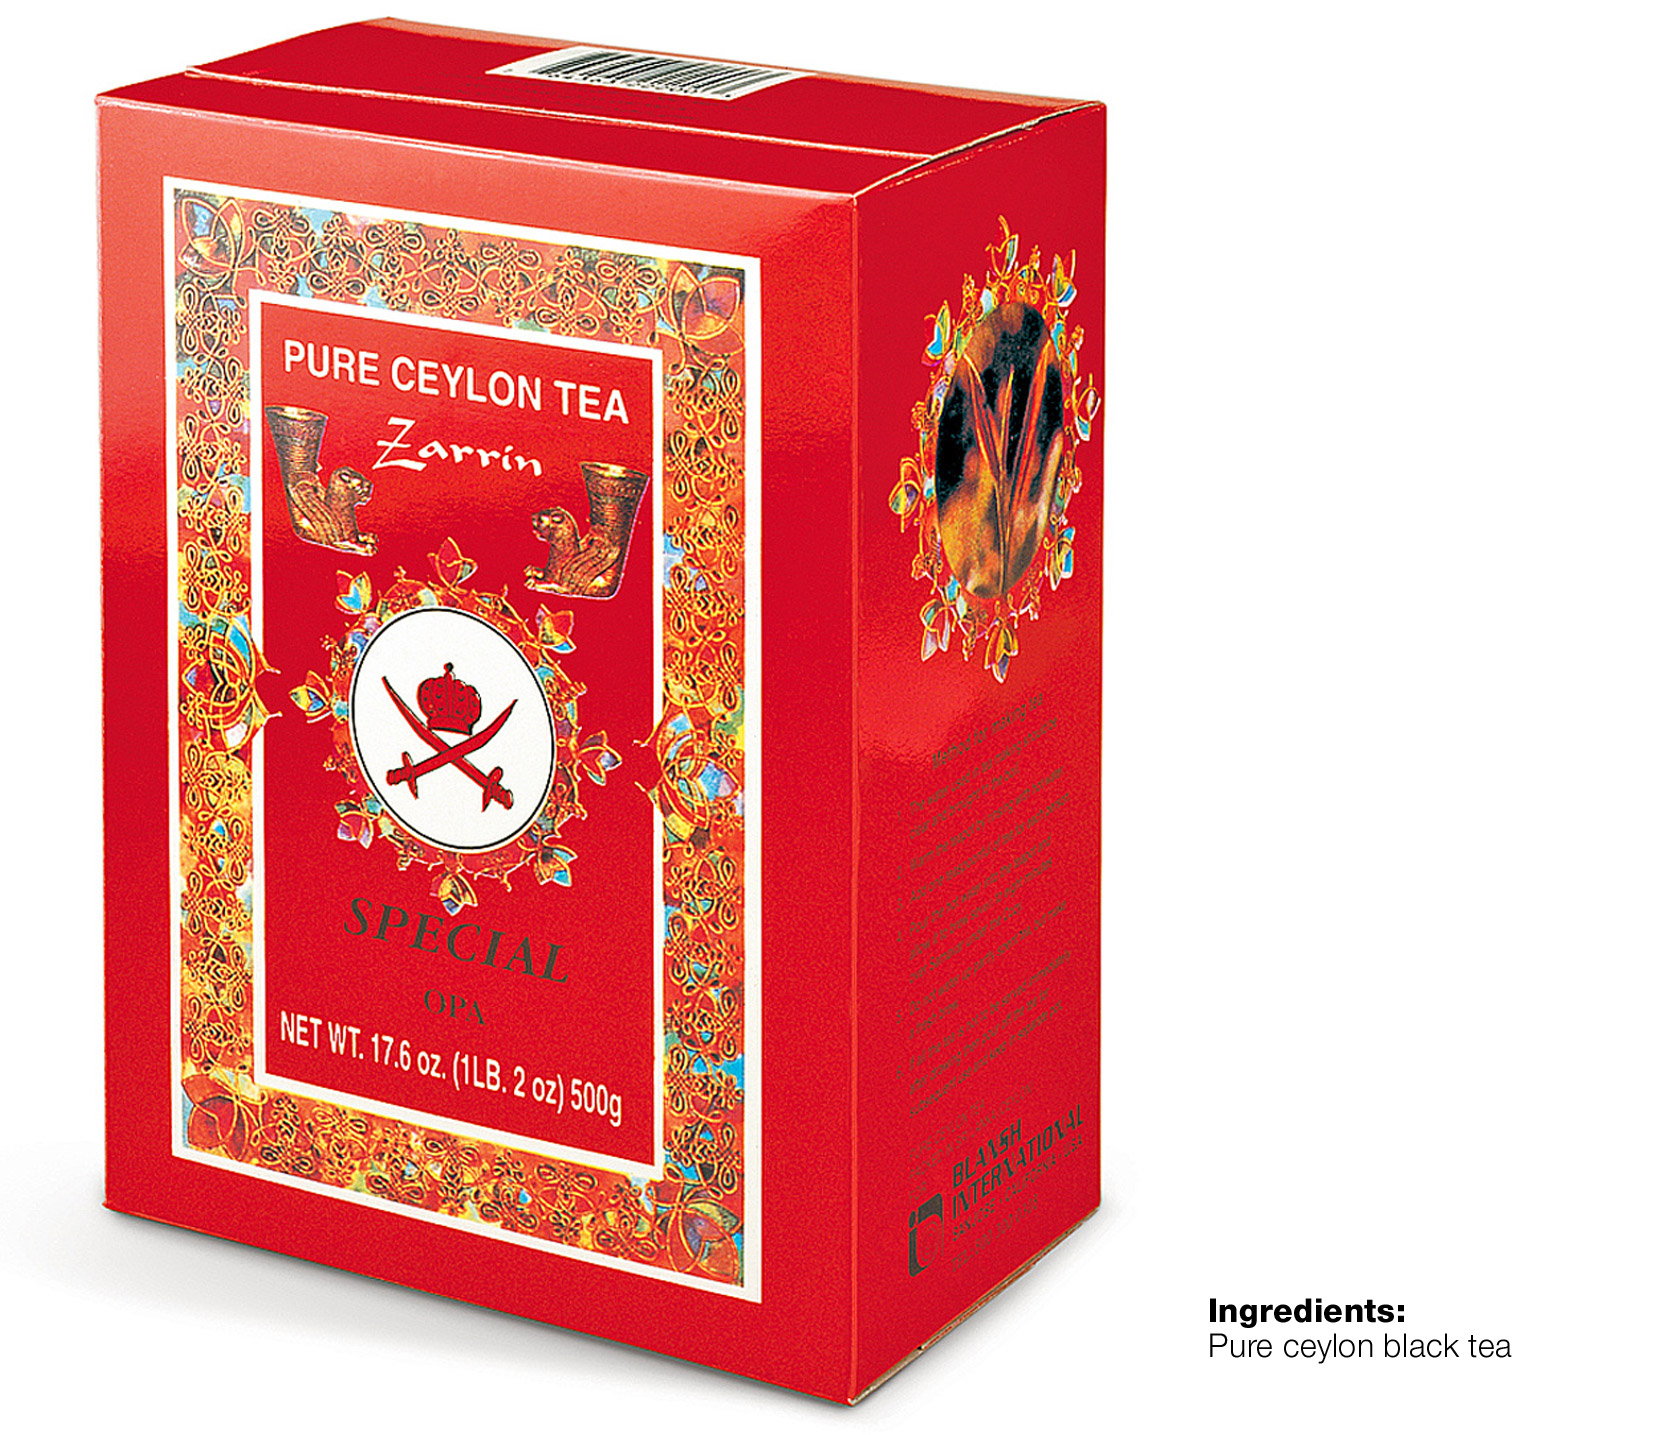 Zarrin ceylon opa red packet tea 17.6 oz.